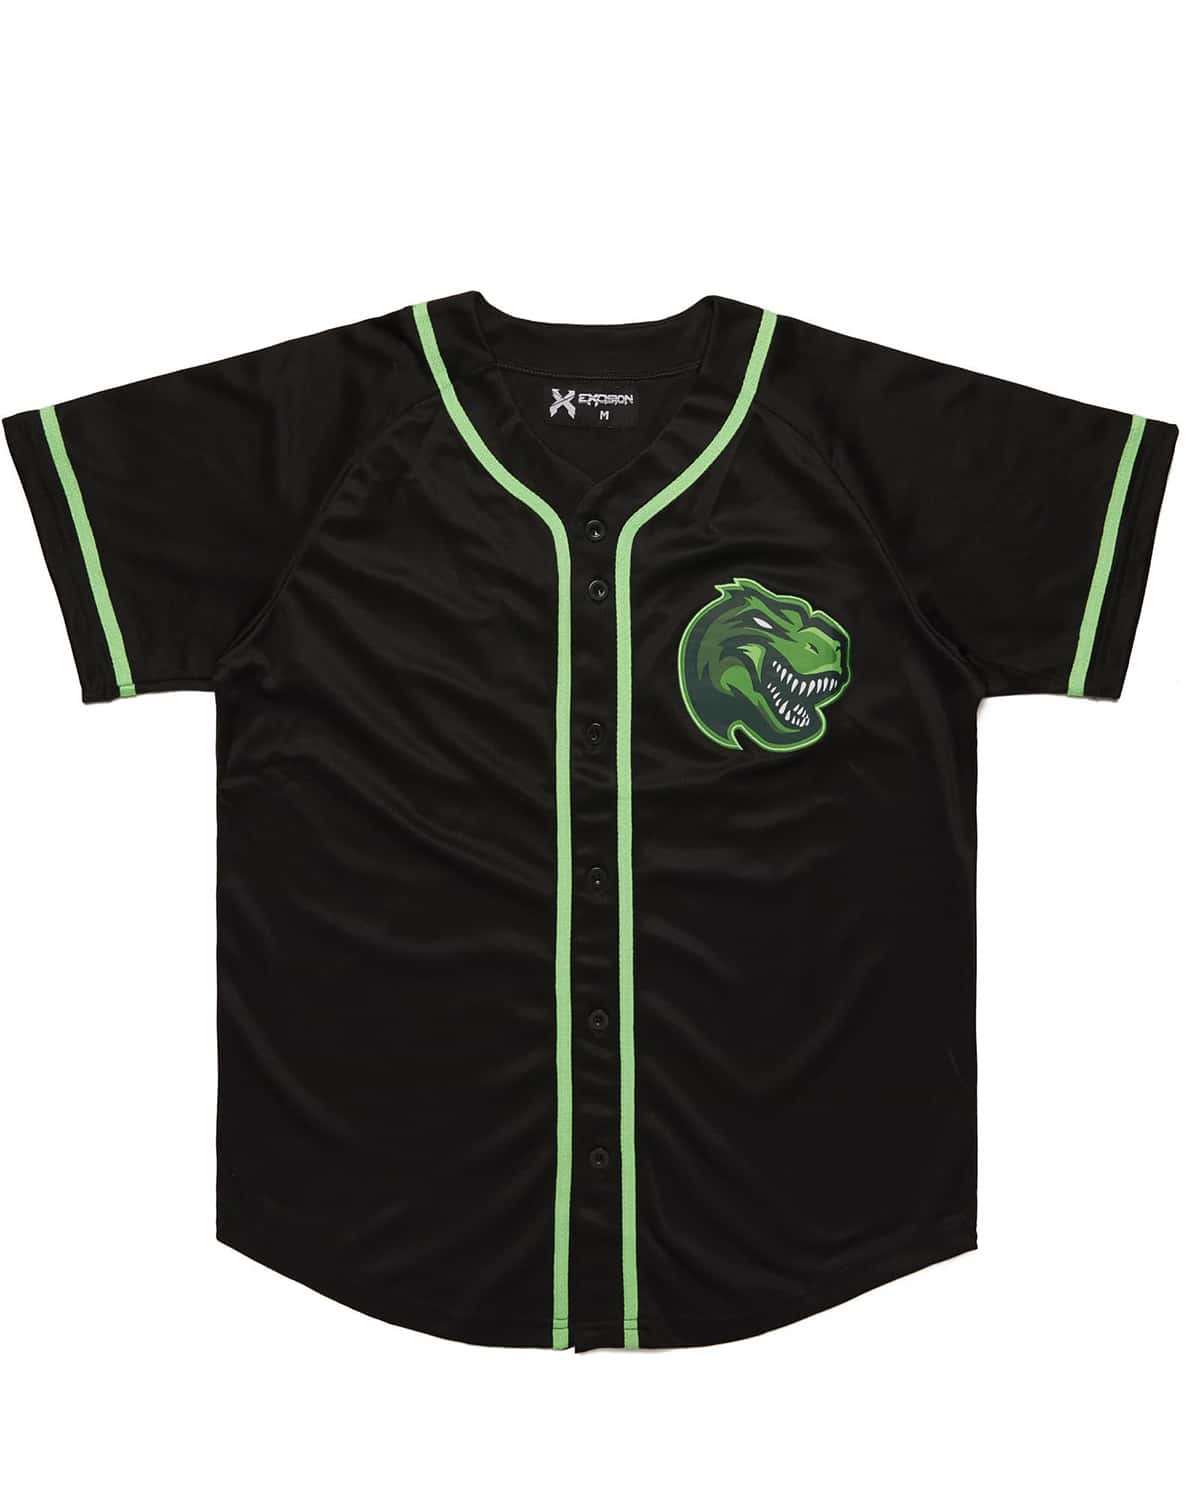 Excision Rex Baseball Jersey - Green